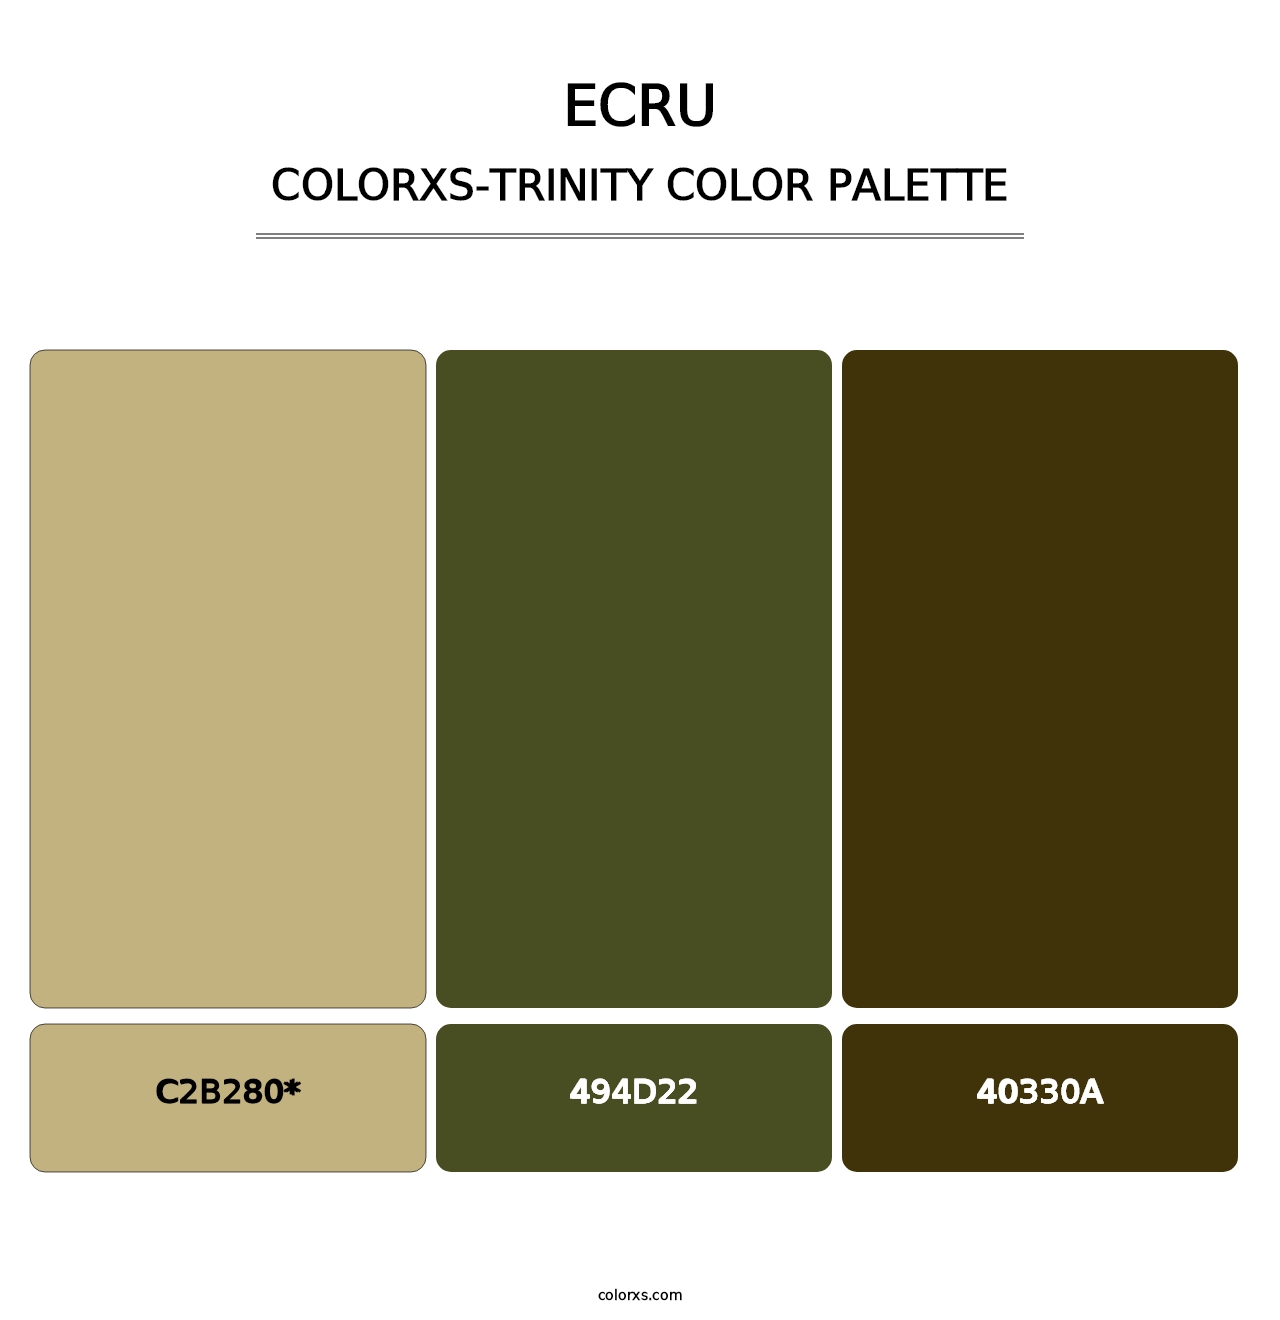 Ecru - Colorxs Trinity Palette